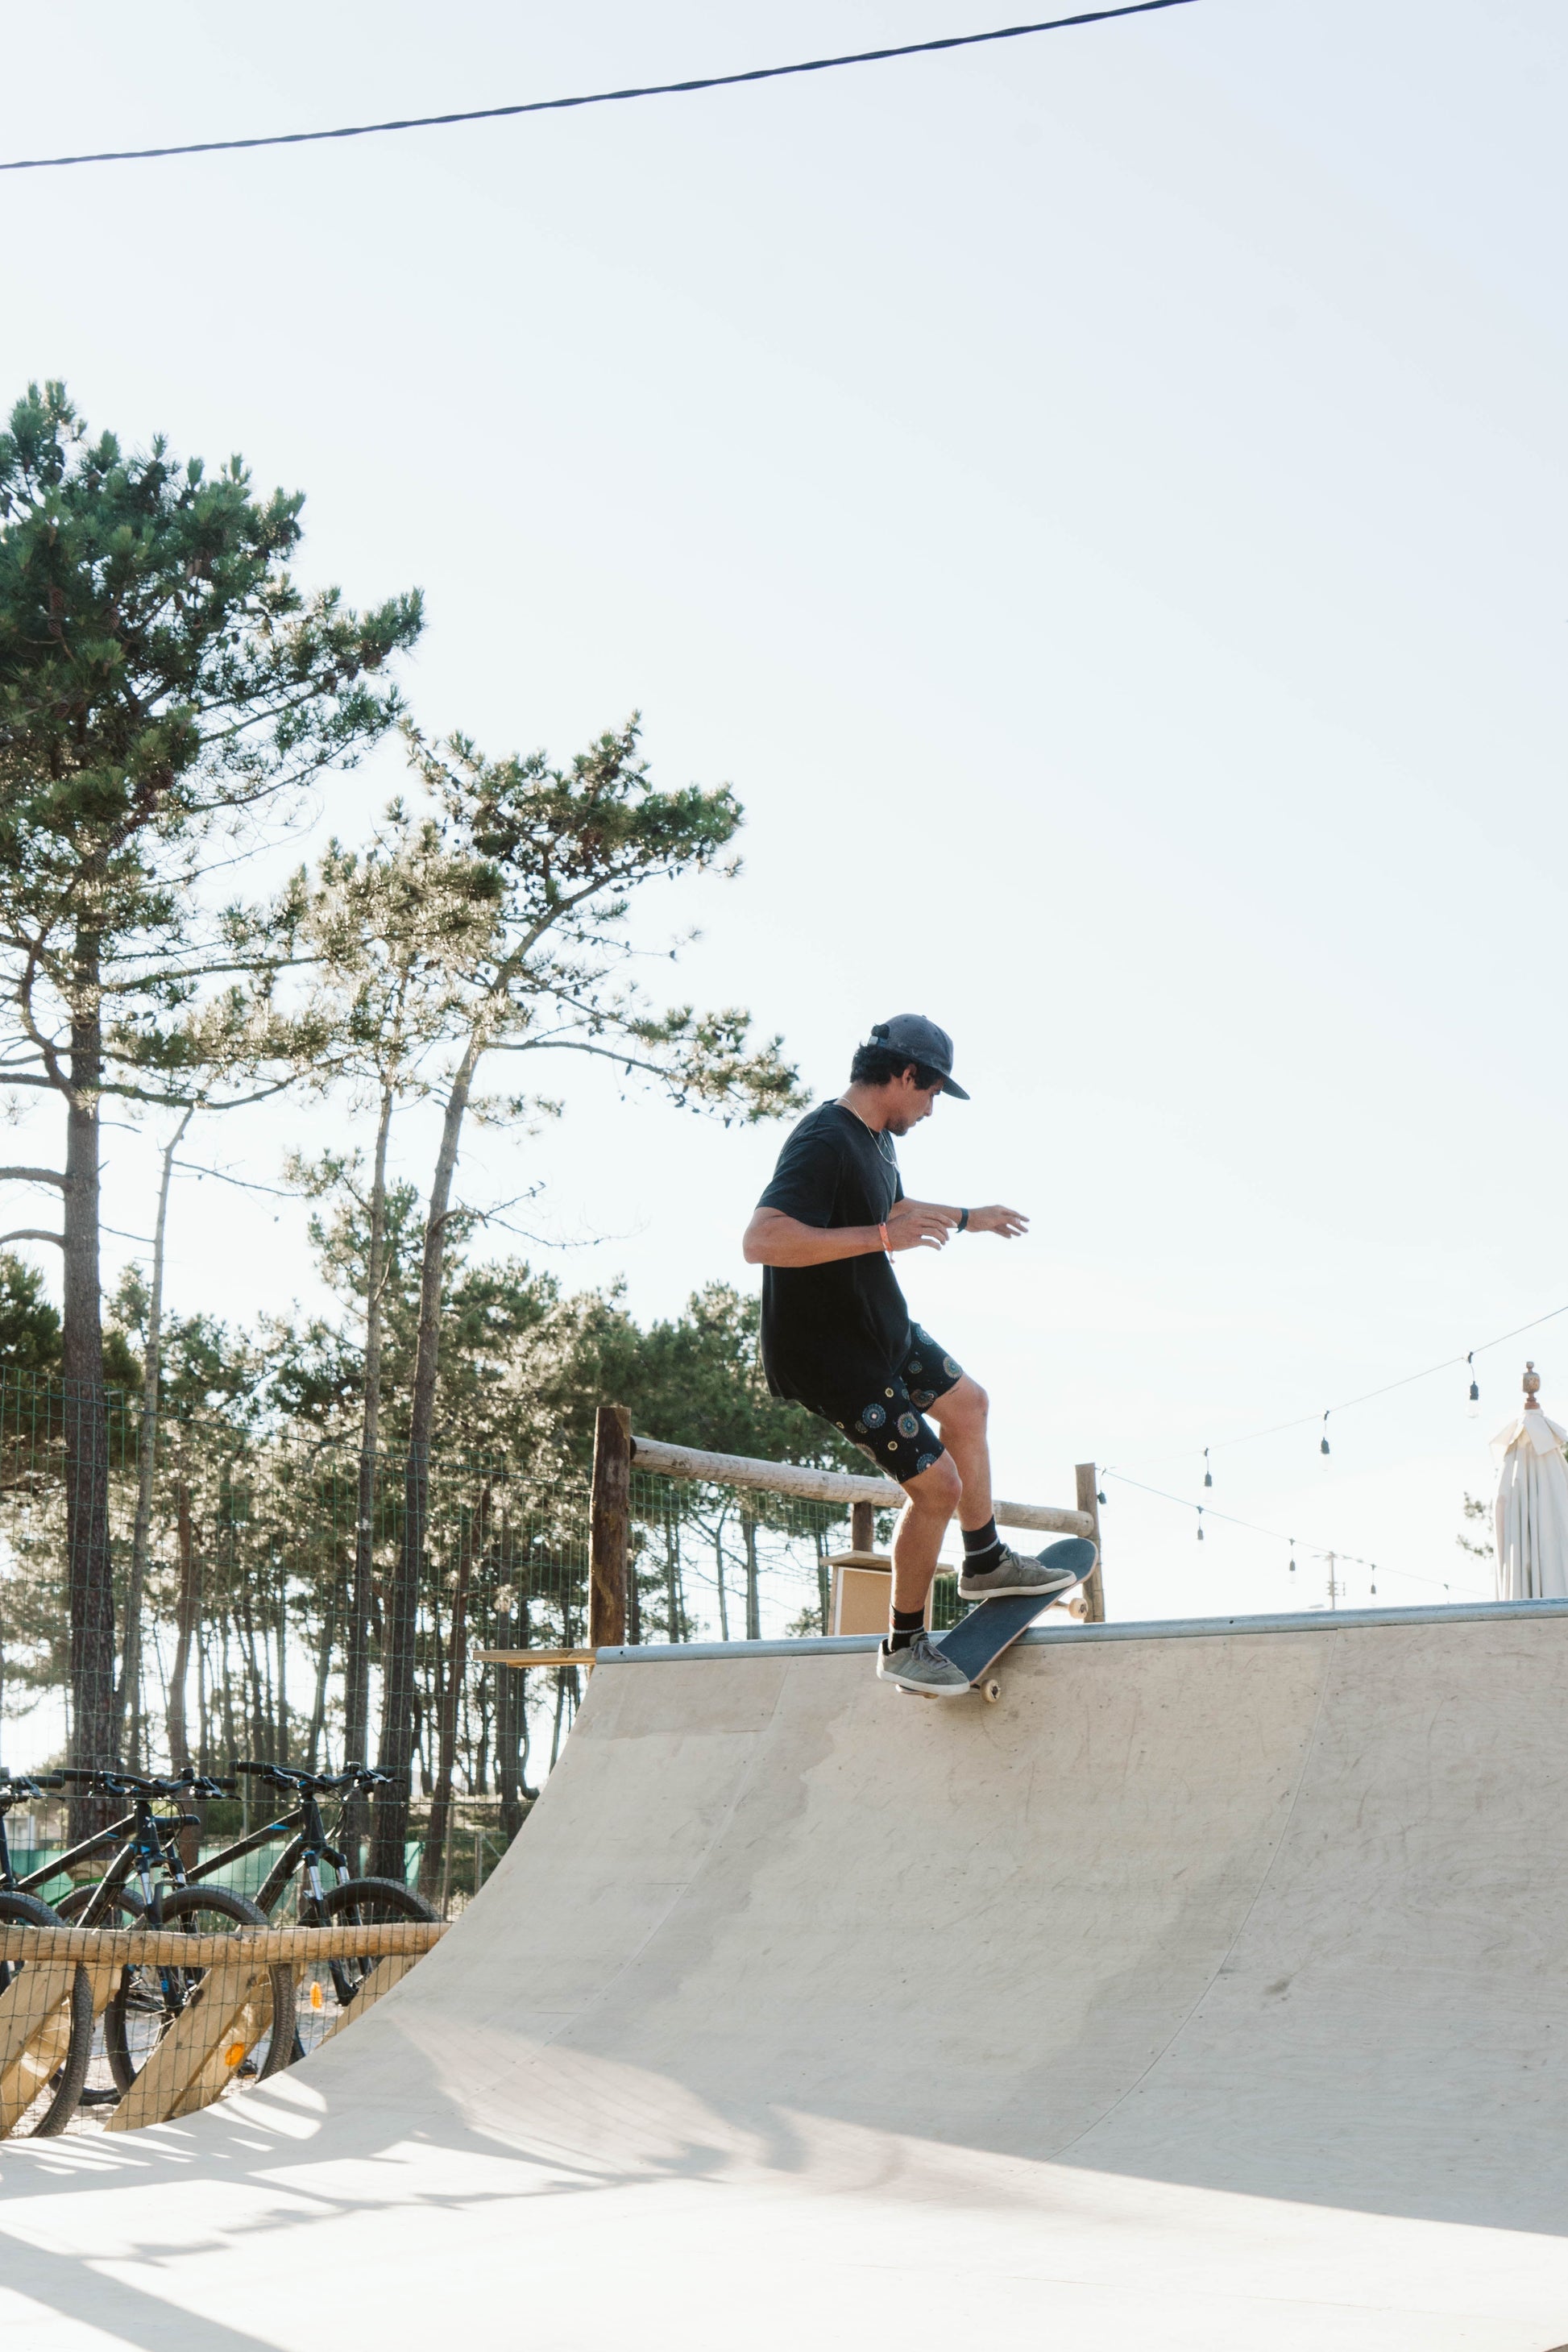 Guy skateboarding on a skate ramp in Praia da Tocha Portugal during a small group trip excursion.